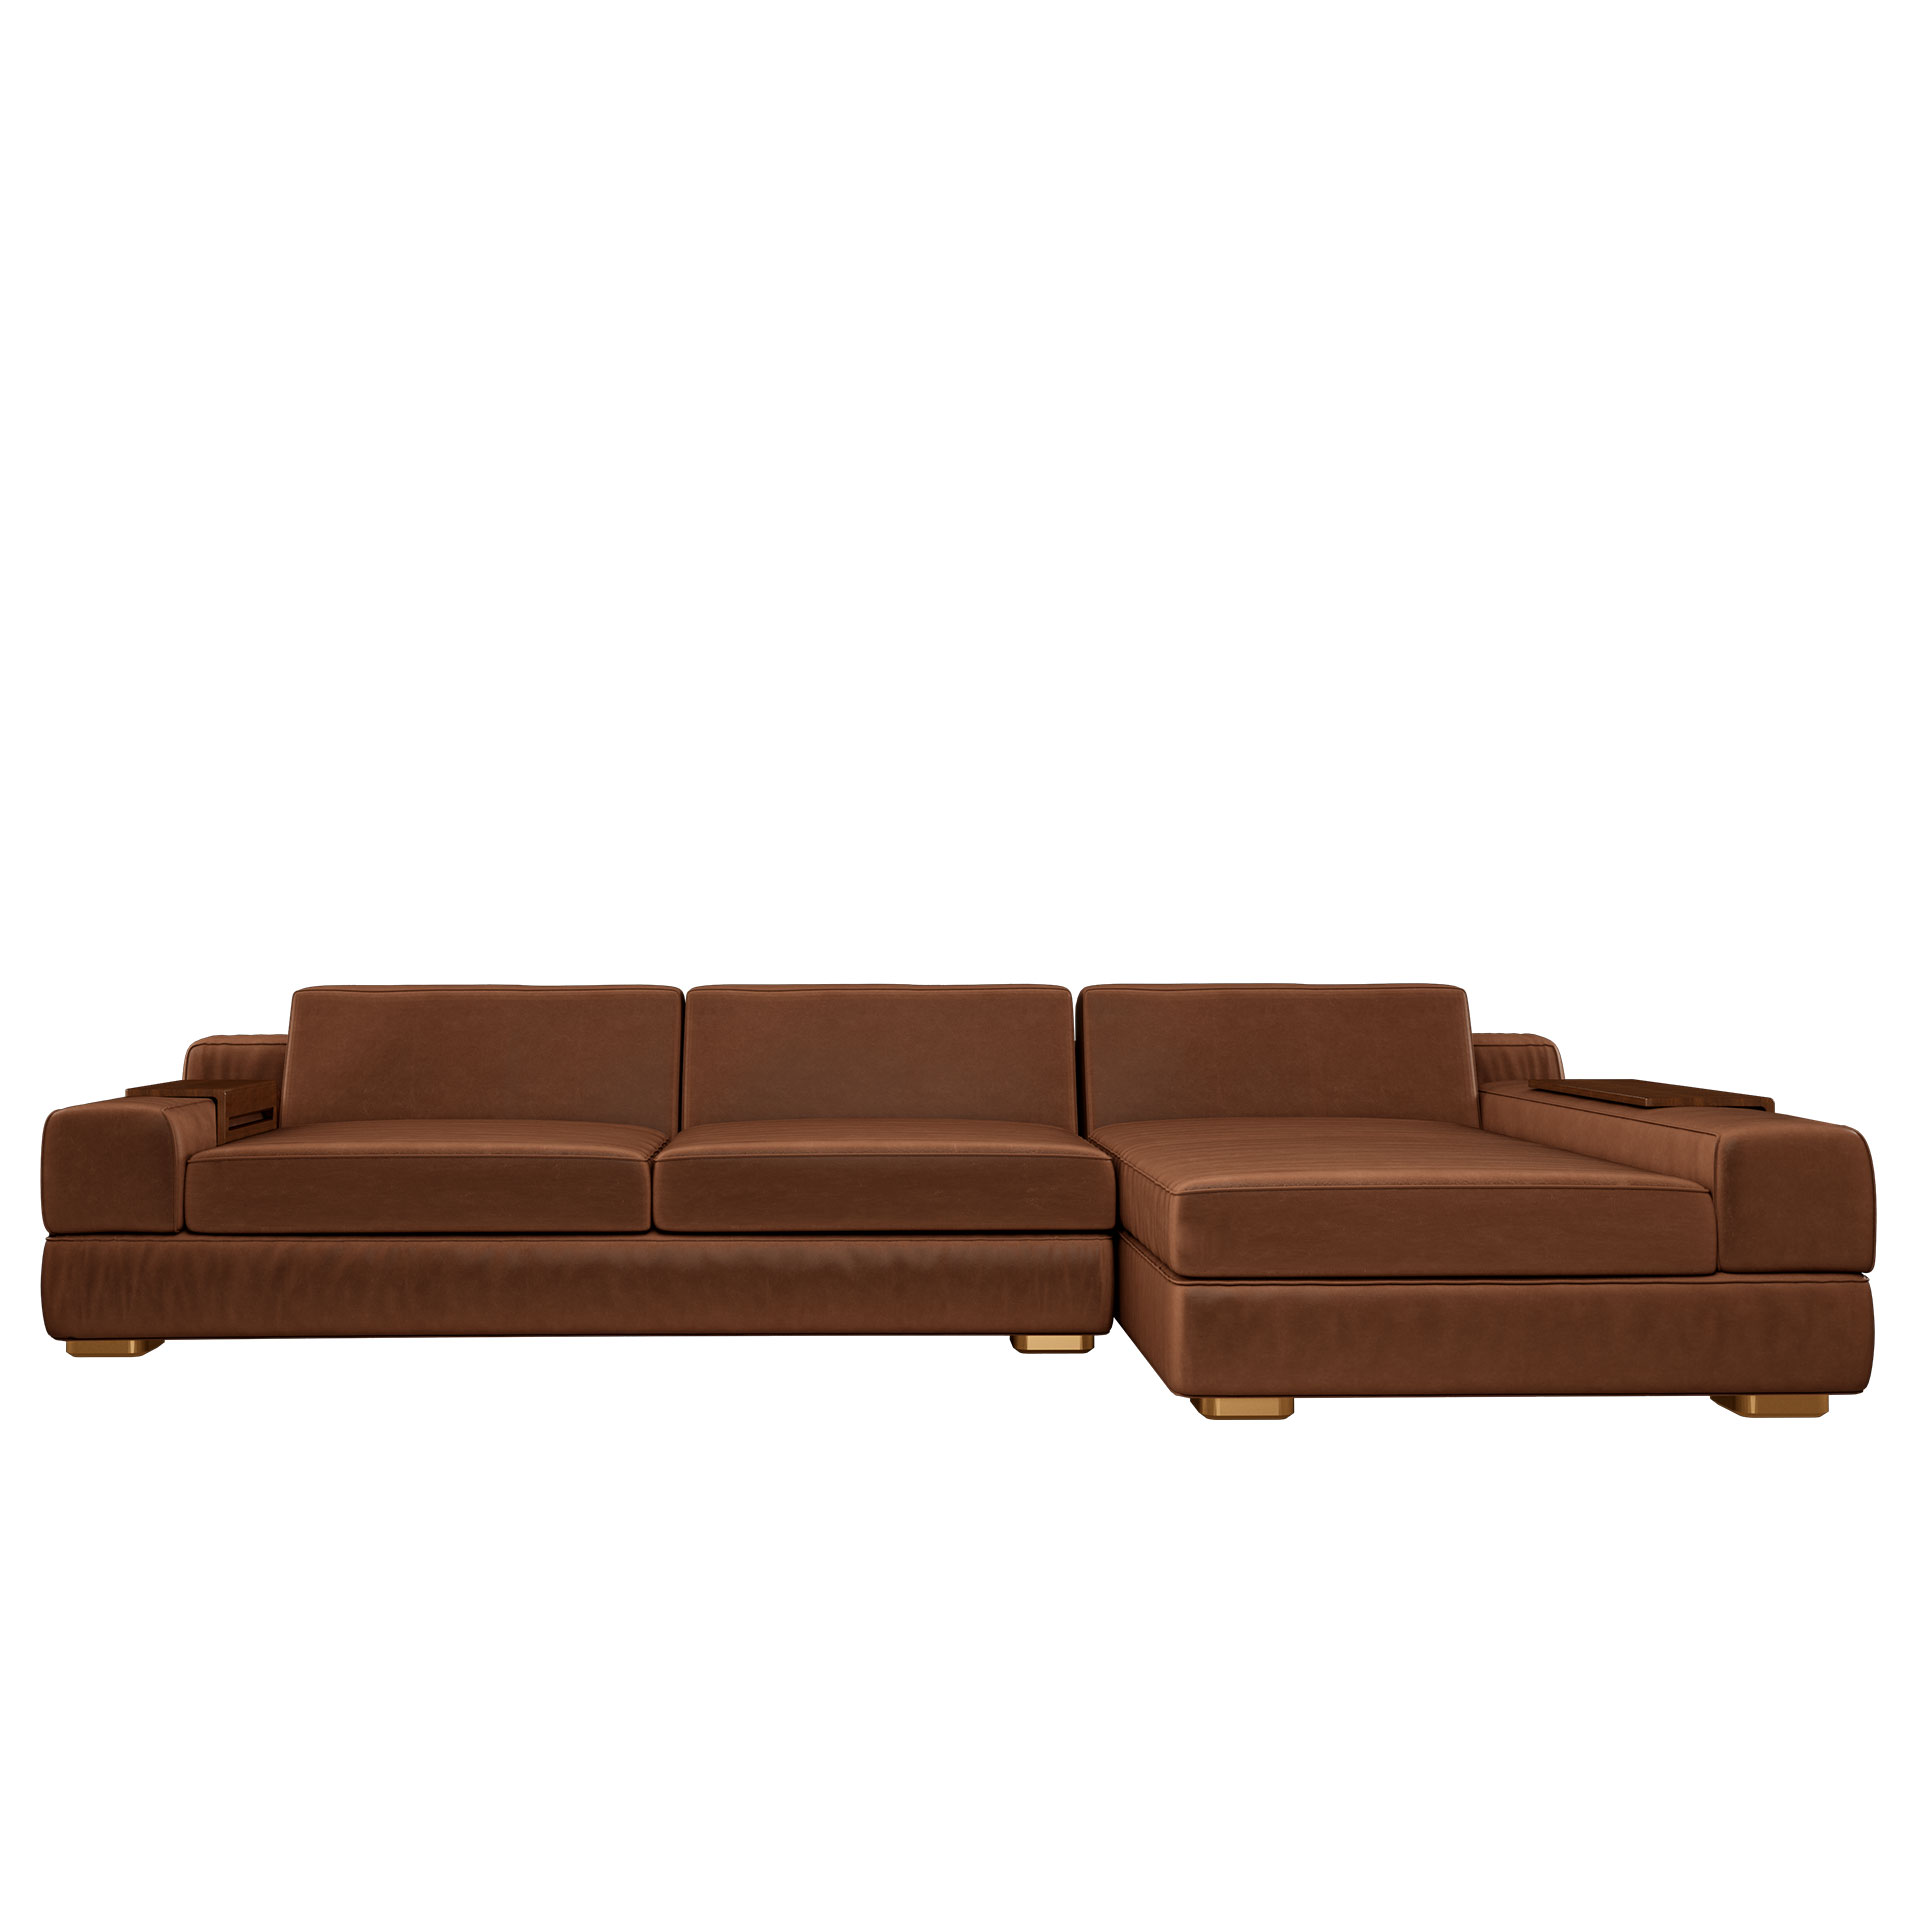 Canyon sofa